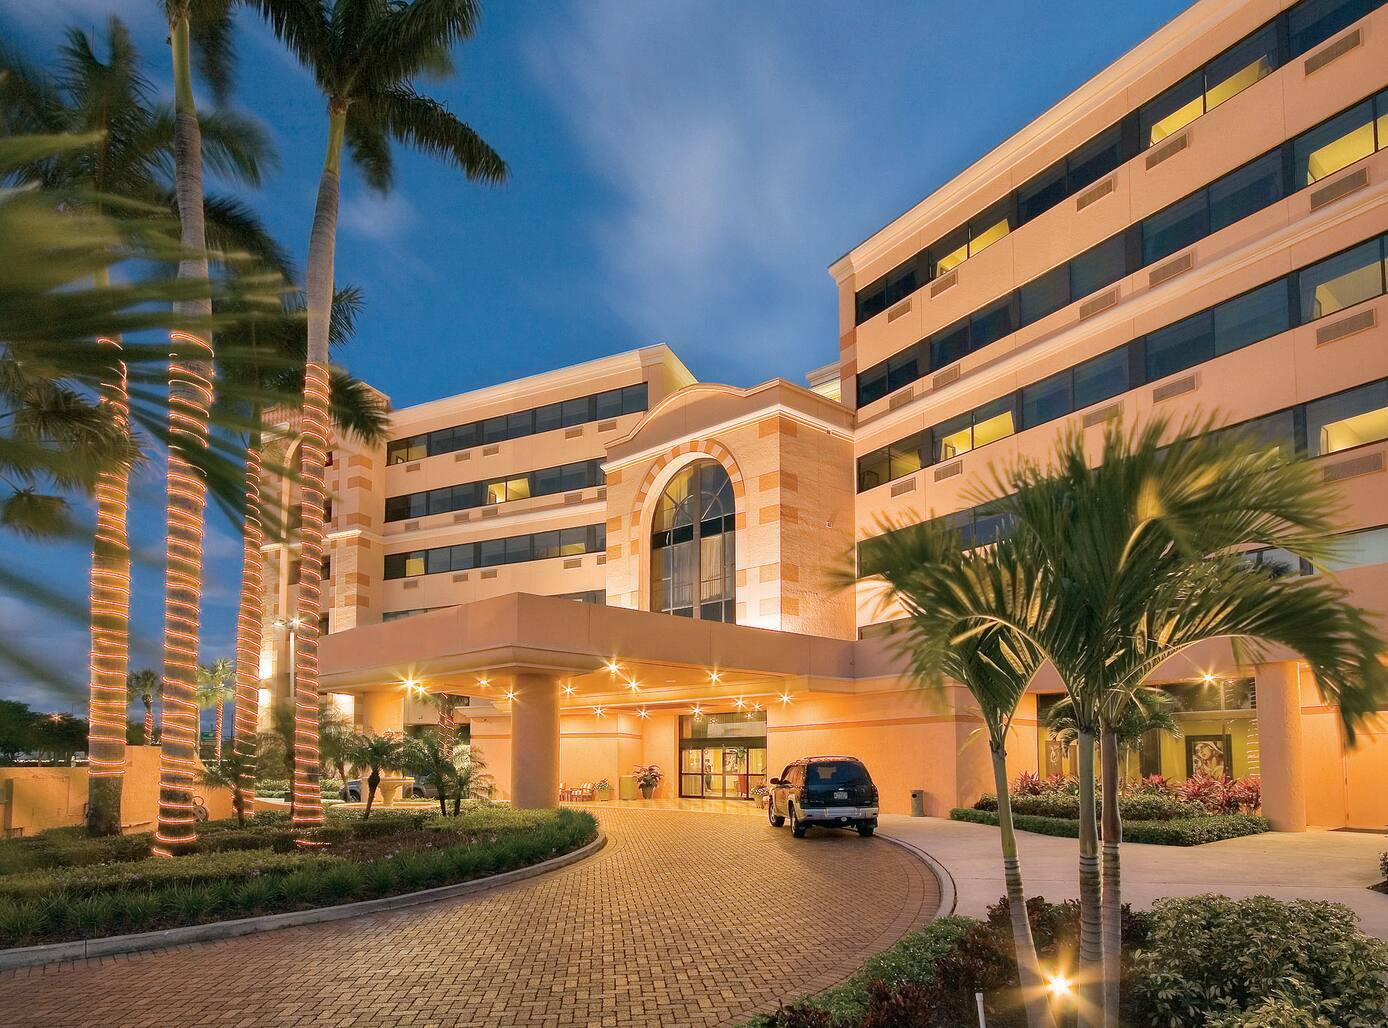 Photo of DoubleTree by Hilton Hotel West Palm Beach Airport, West Palm Beach, FL